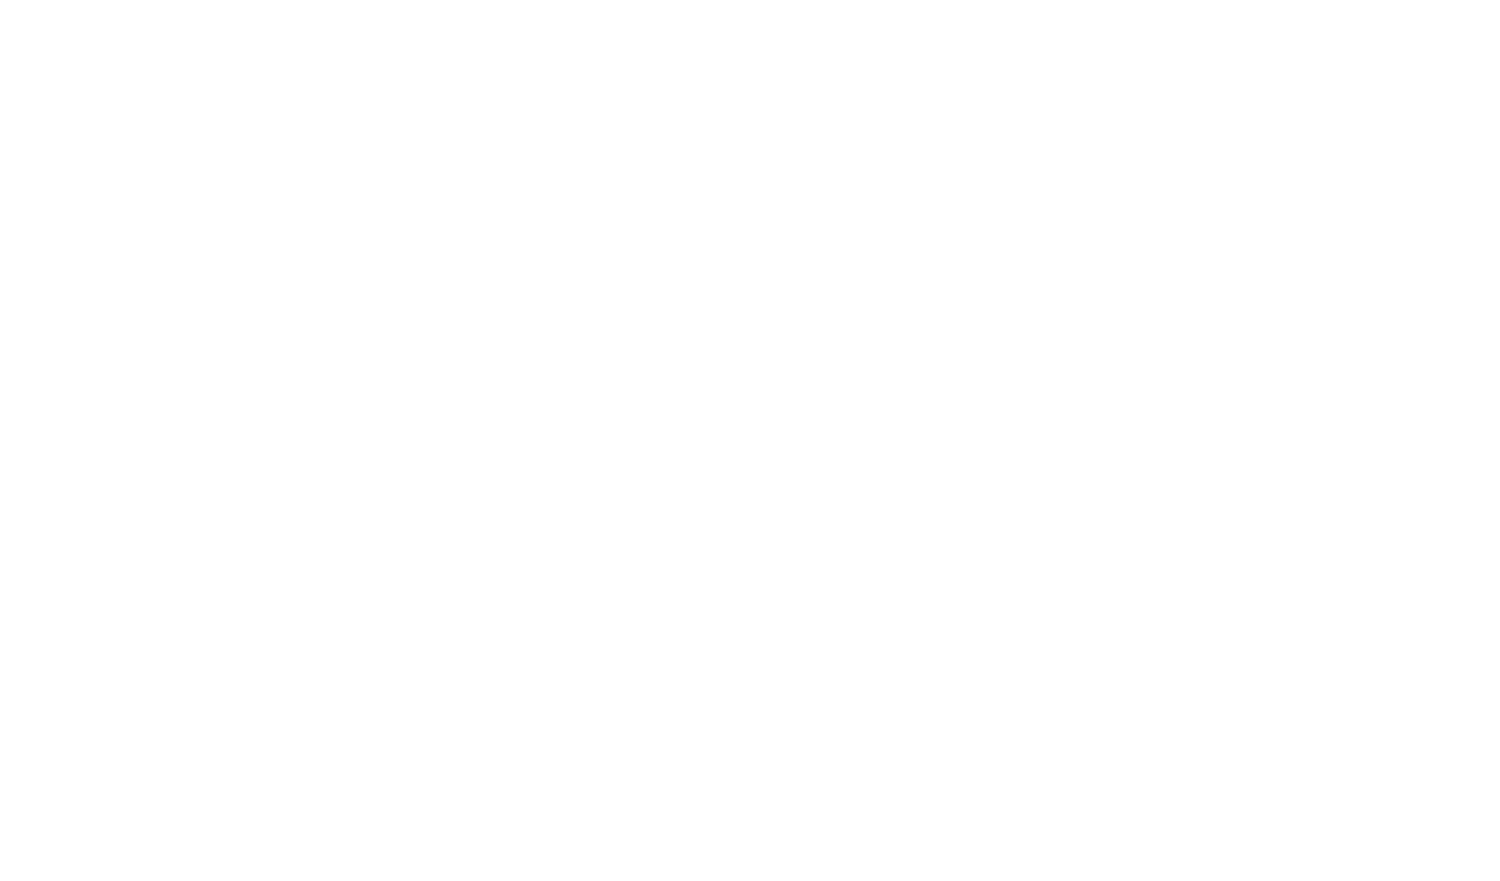 Around The Clock Bail Bonds